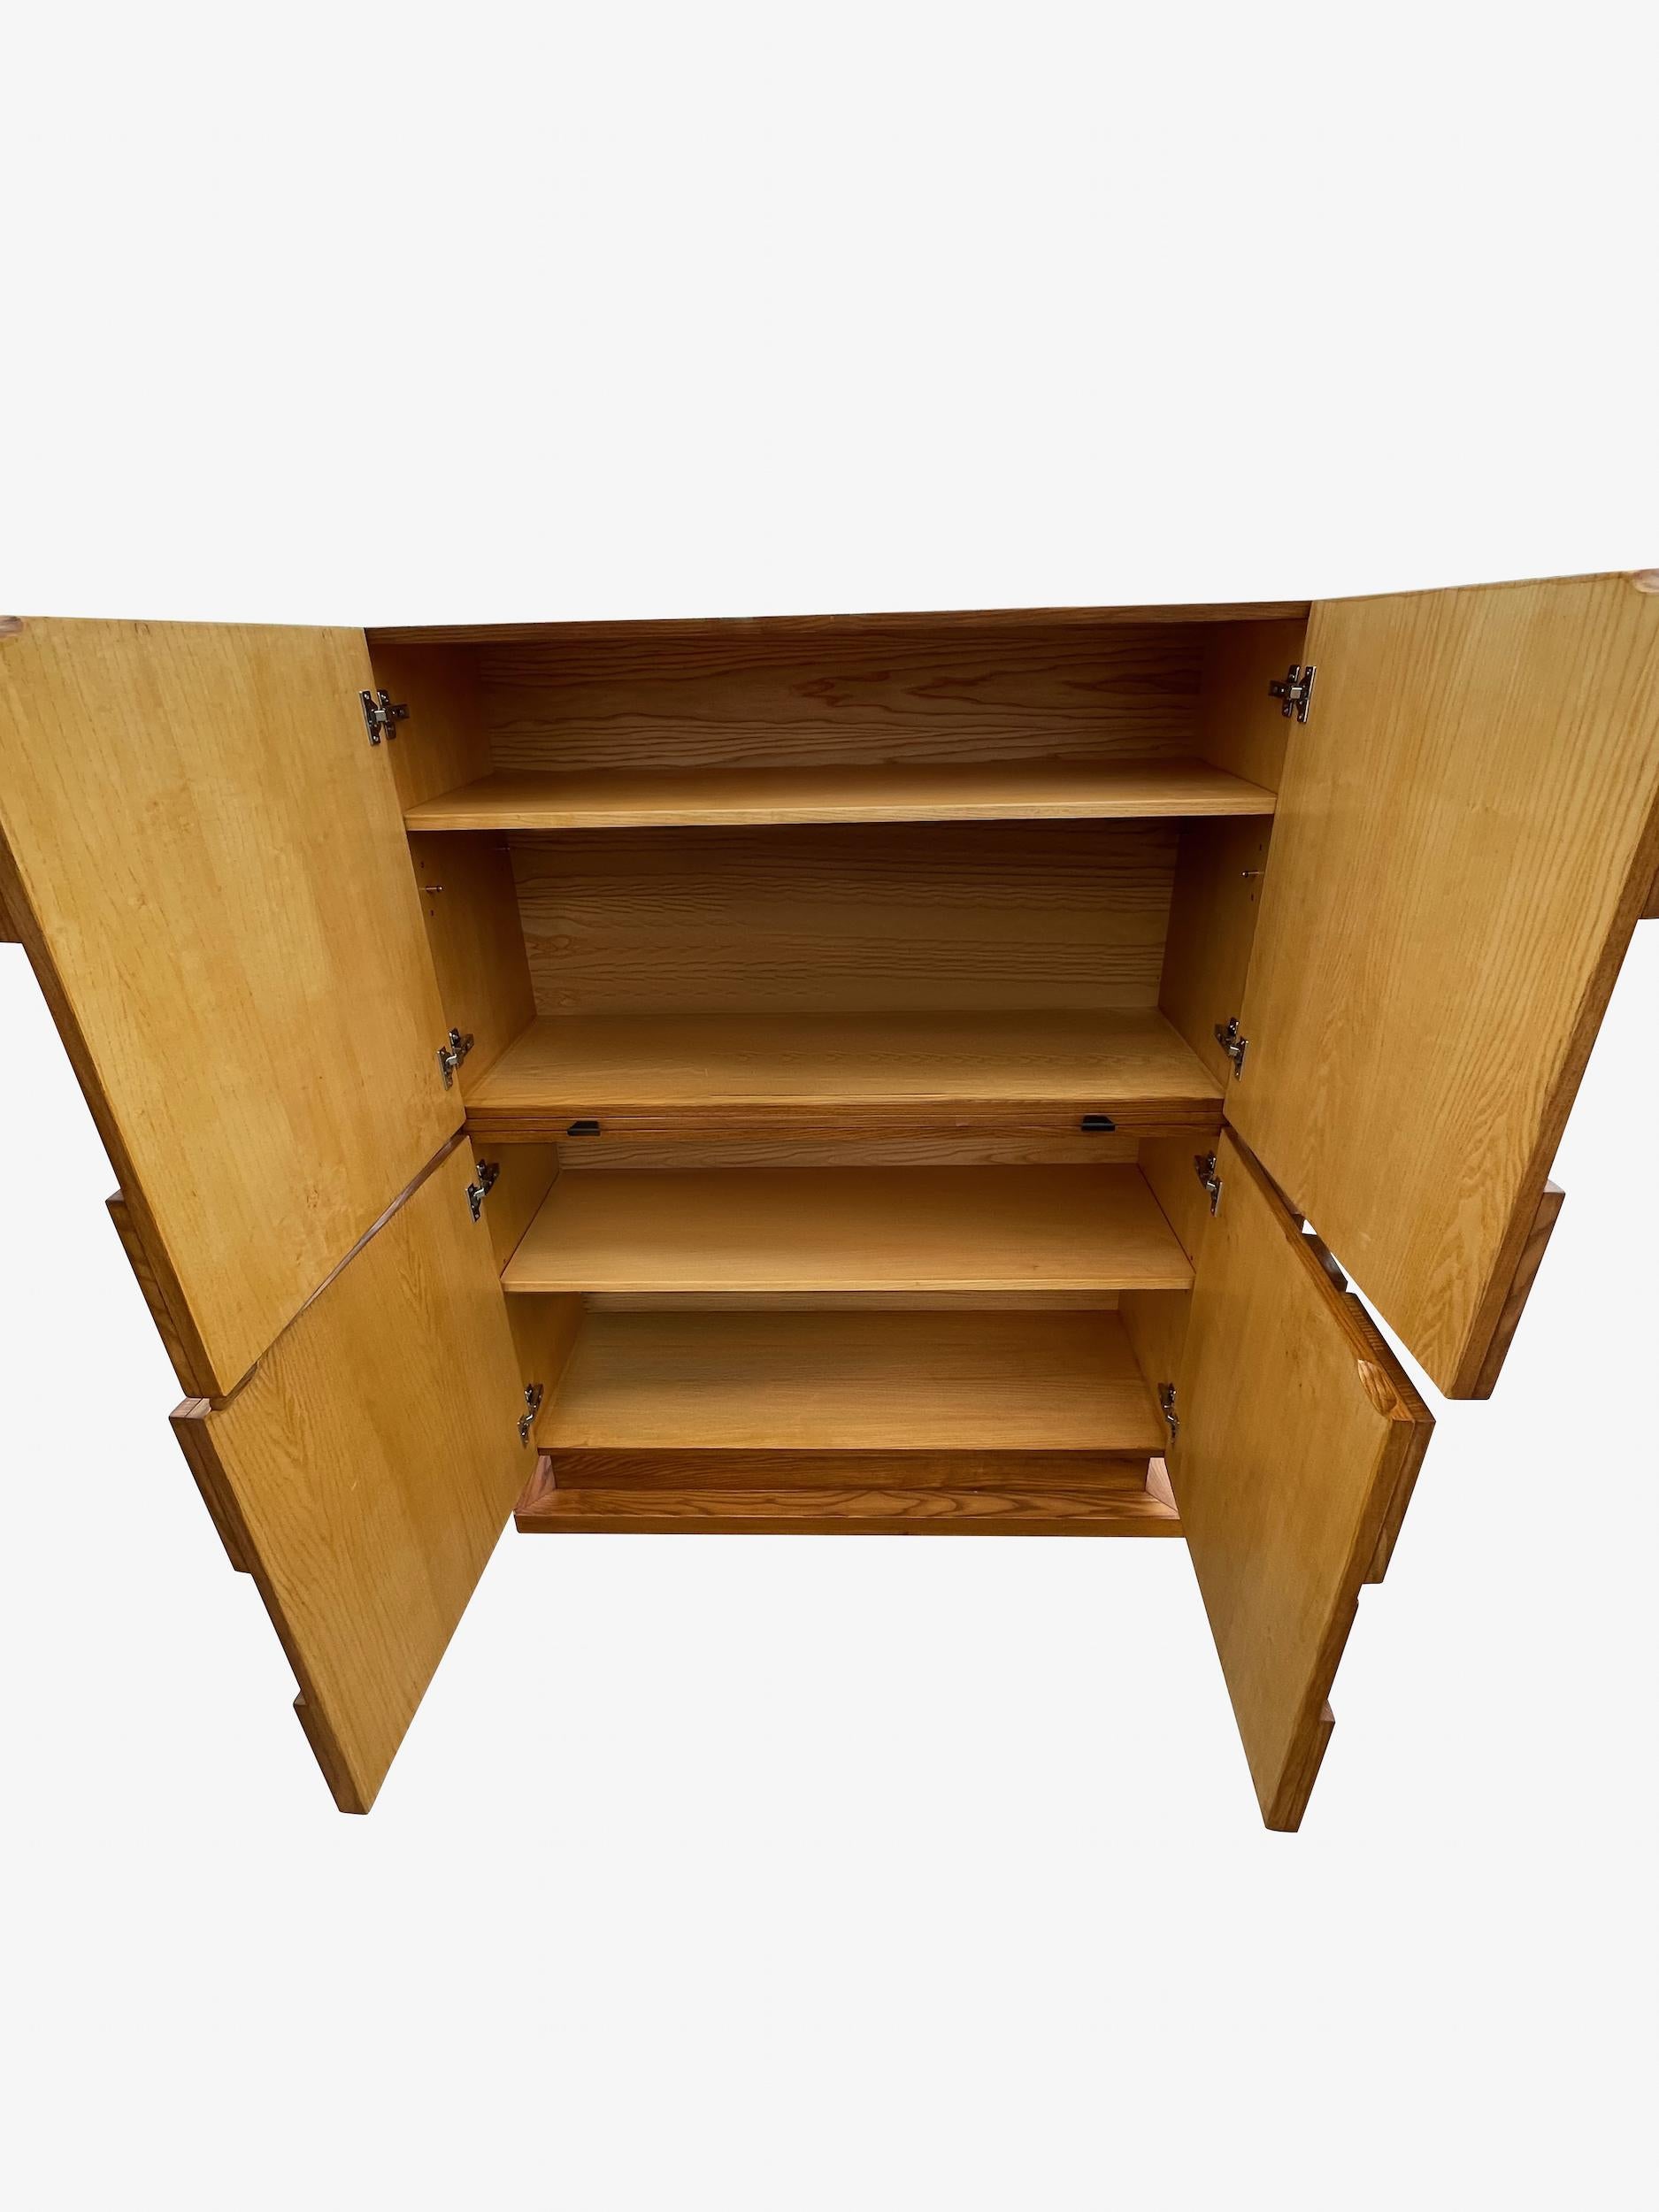 1980's Italian Brutalist design four door cabinet.
Pronounced raised geometric shapes form classic Brutalist design.
Oak wood.
Two inner shelves.
Pull out hidden shelf makes for a desk top ledge.
